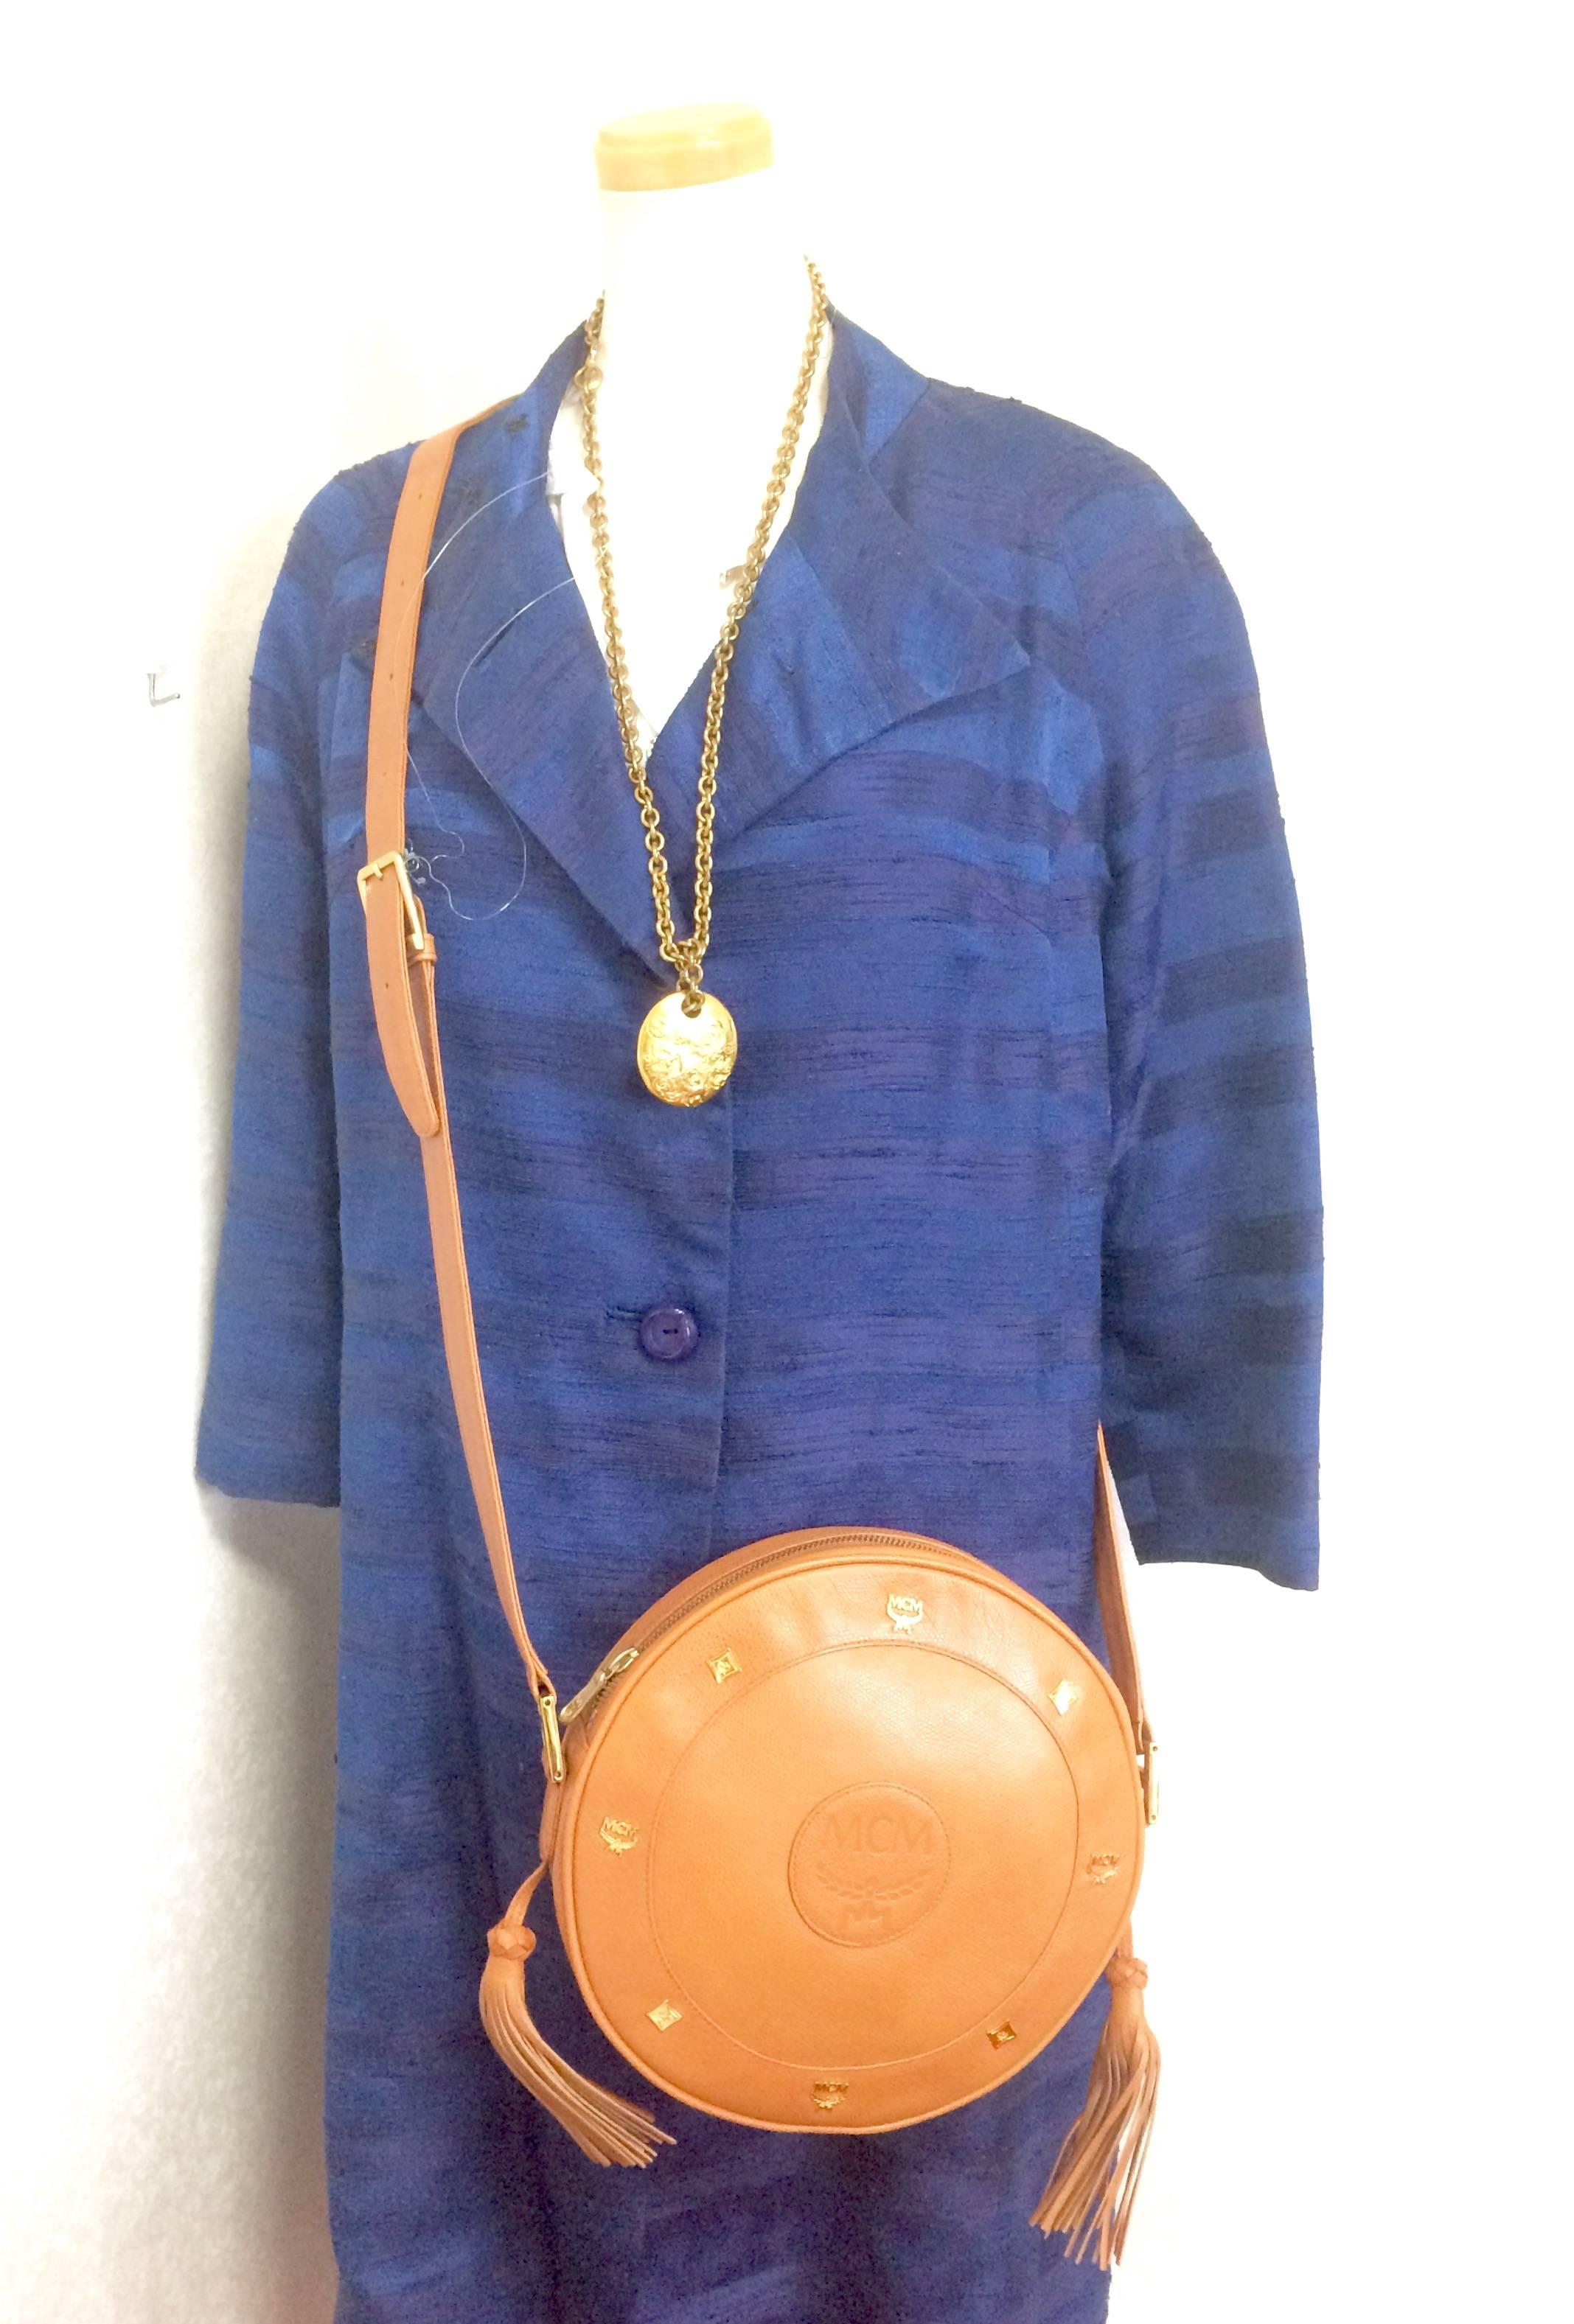 MINT. Vintage MCM brown grained leather logo studs round shoulder bag. Suzy Wong 2